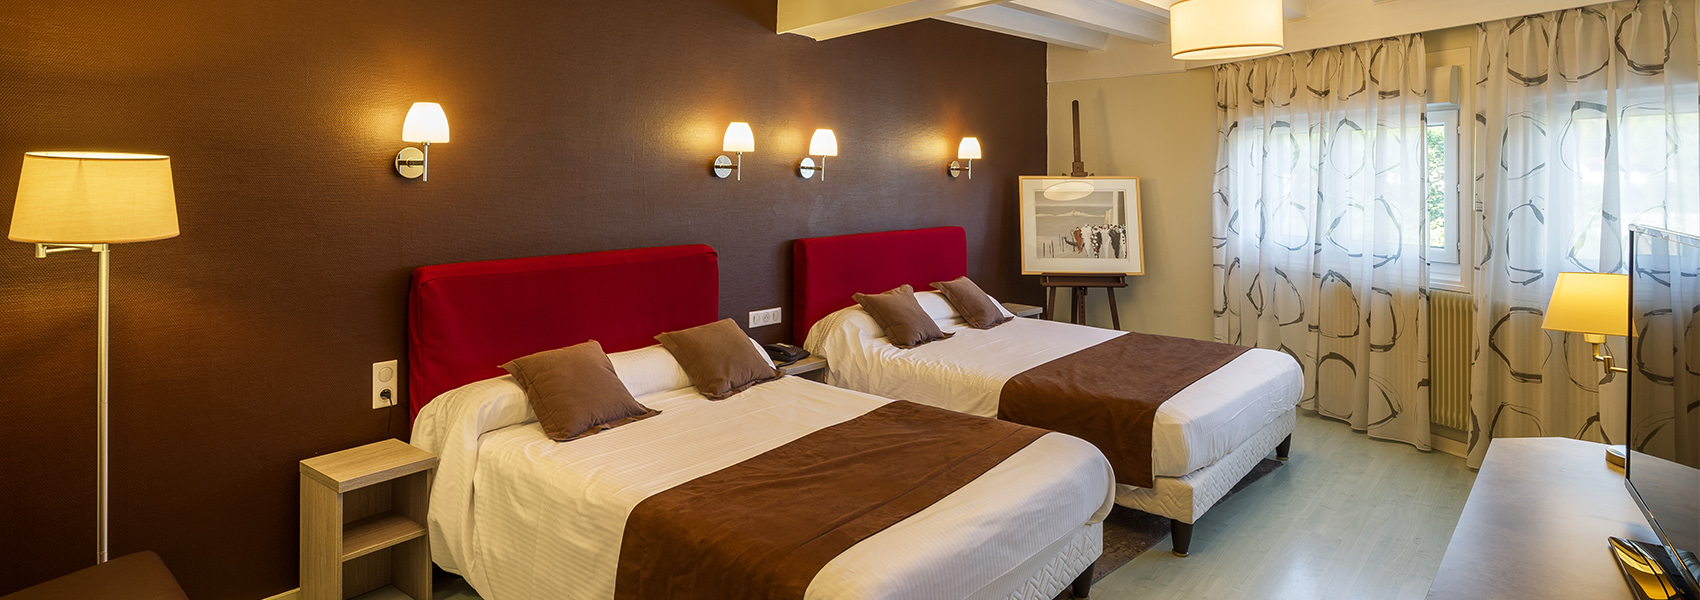 3 star room, Relais hotel le Saint-Hubert in Saint-Claude in the Jura.